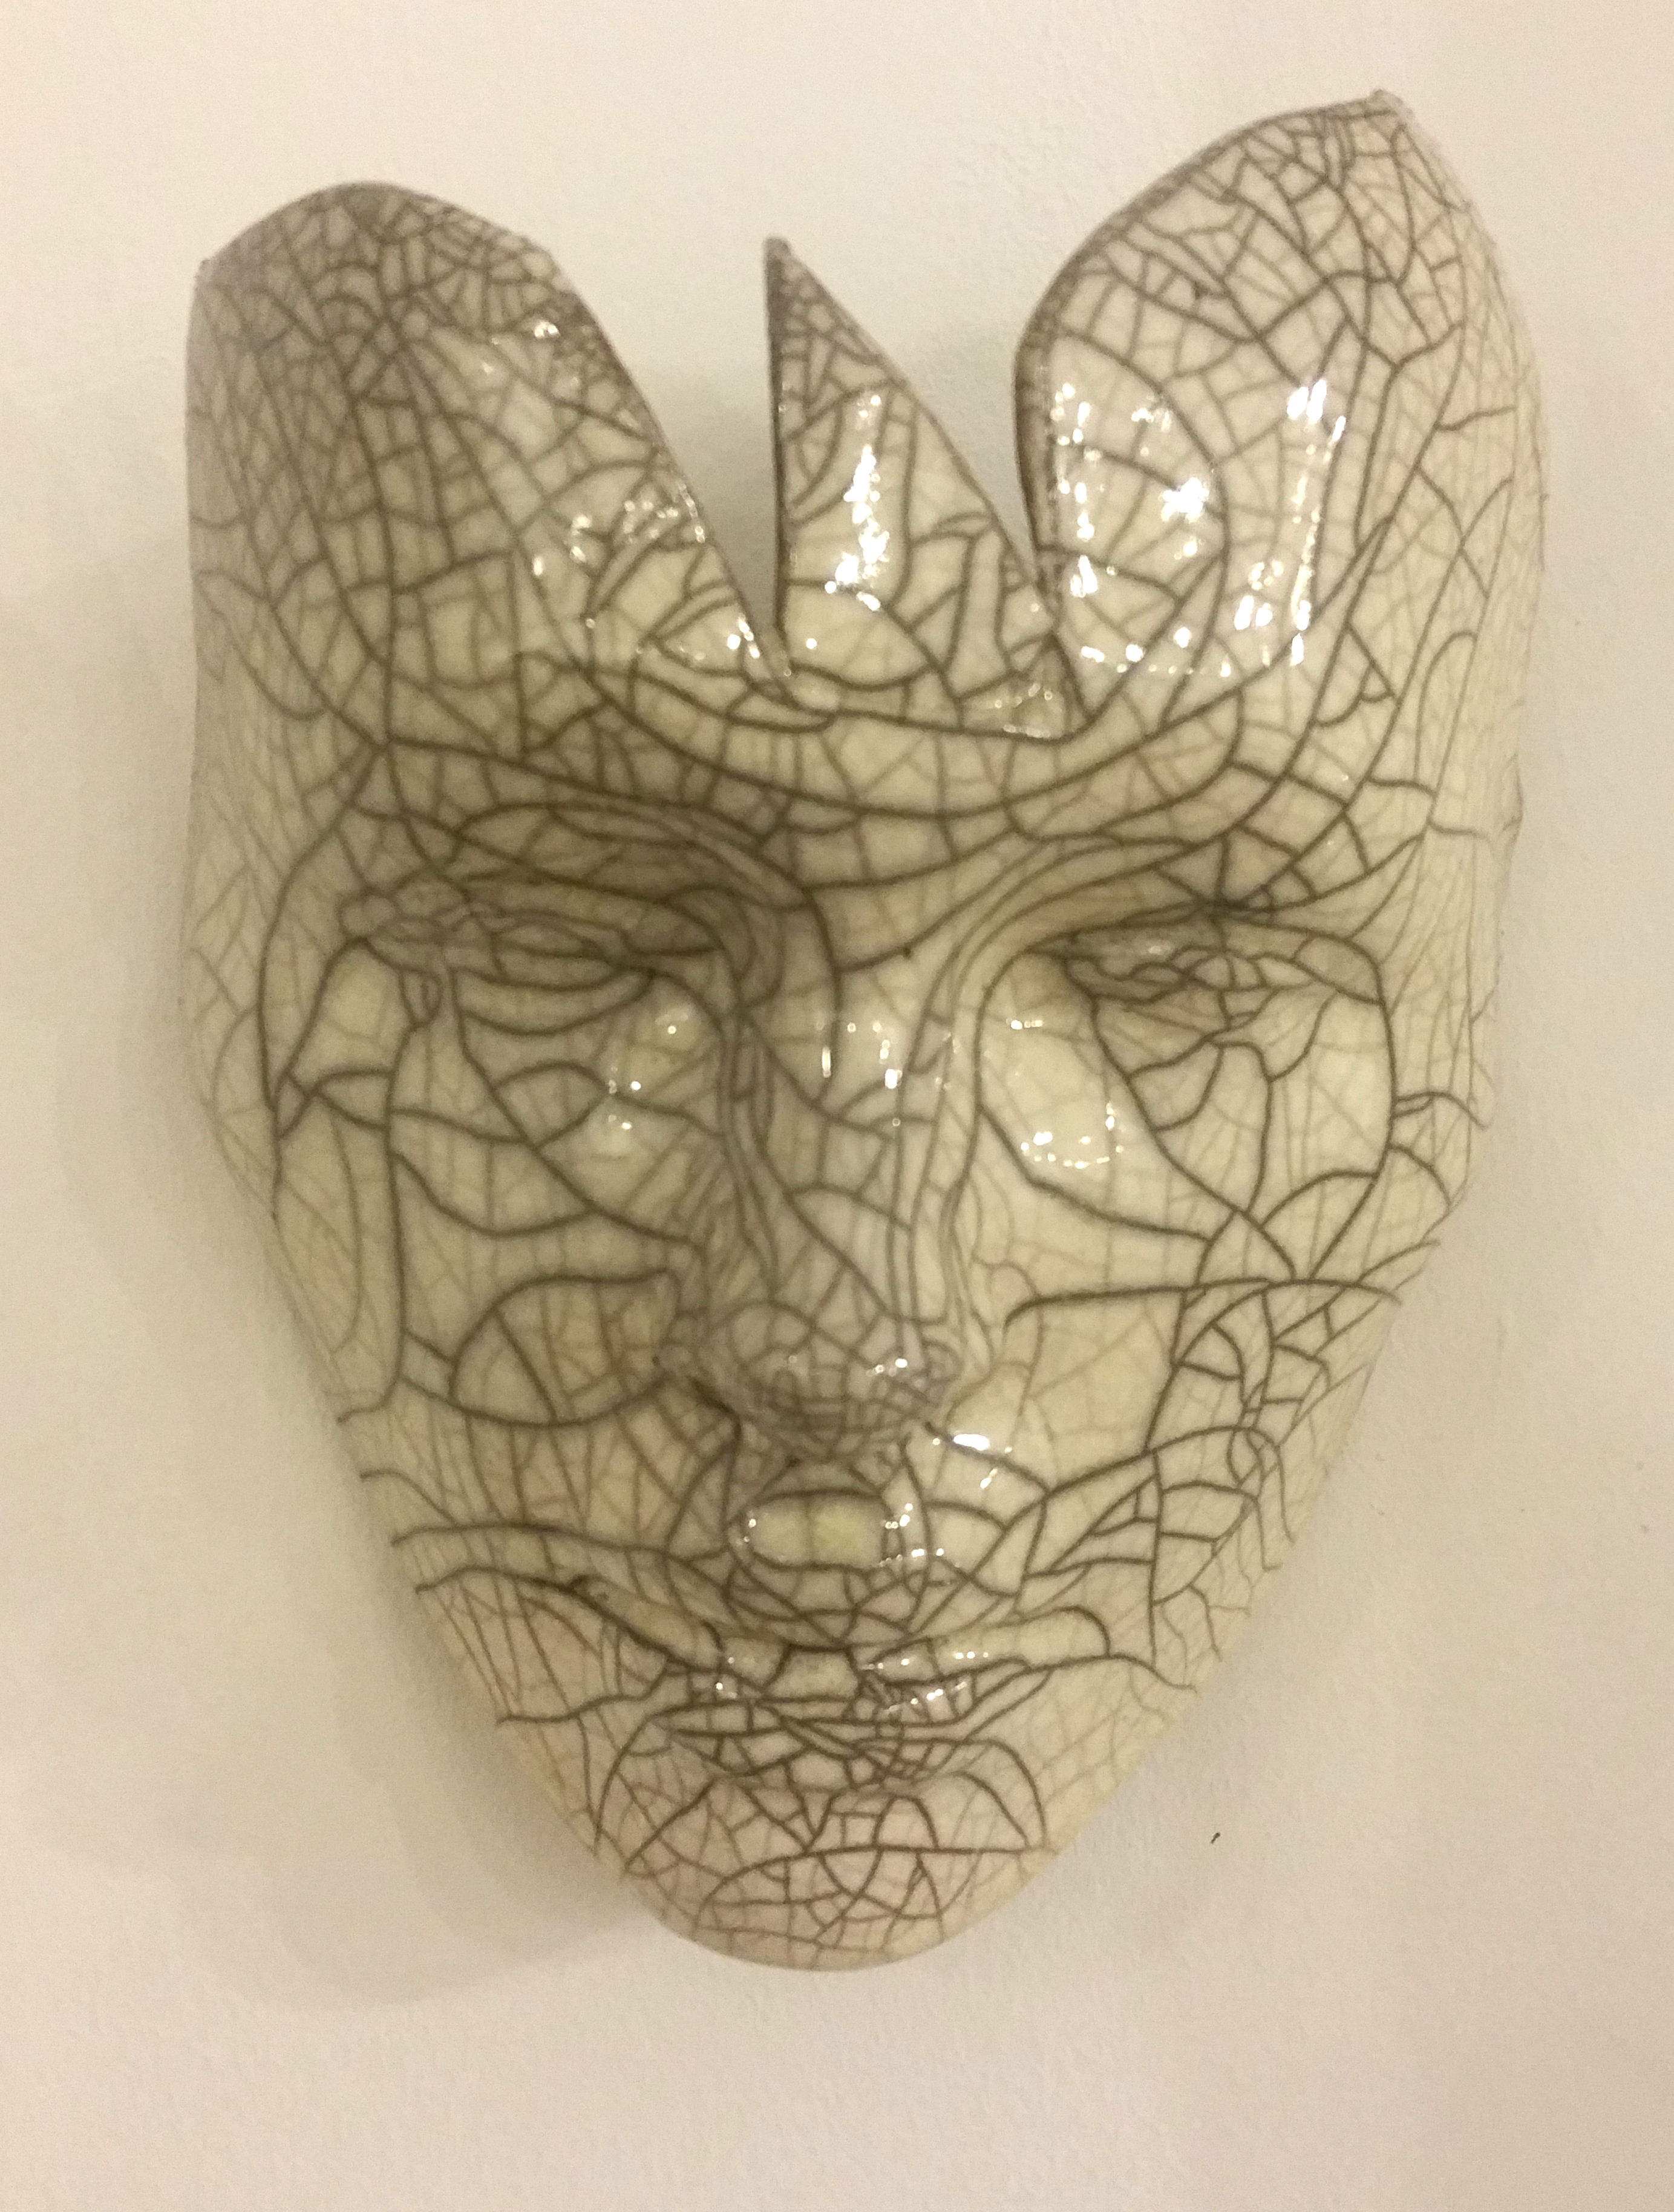 'Mask VI' by artist Julian Smith